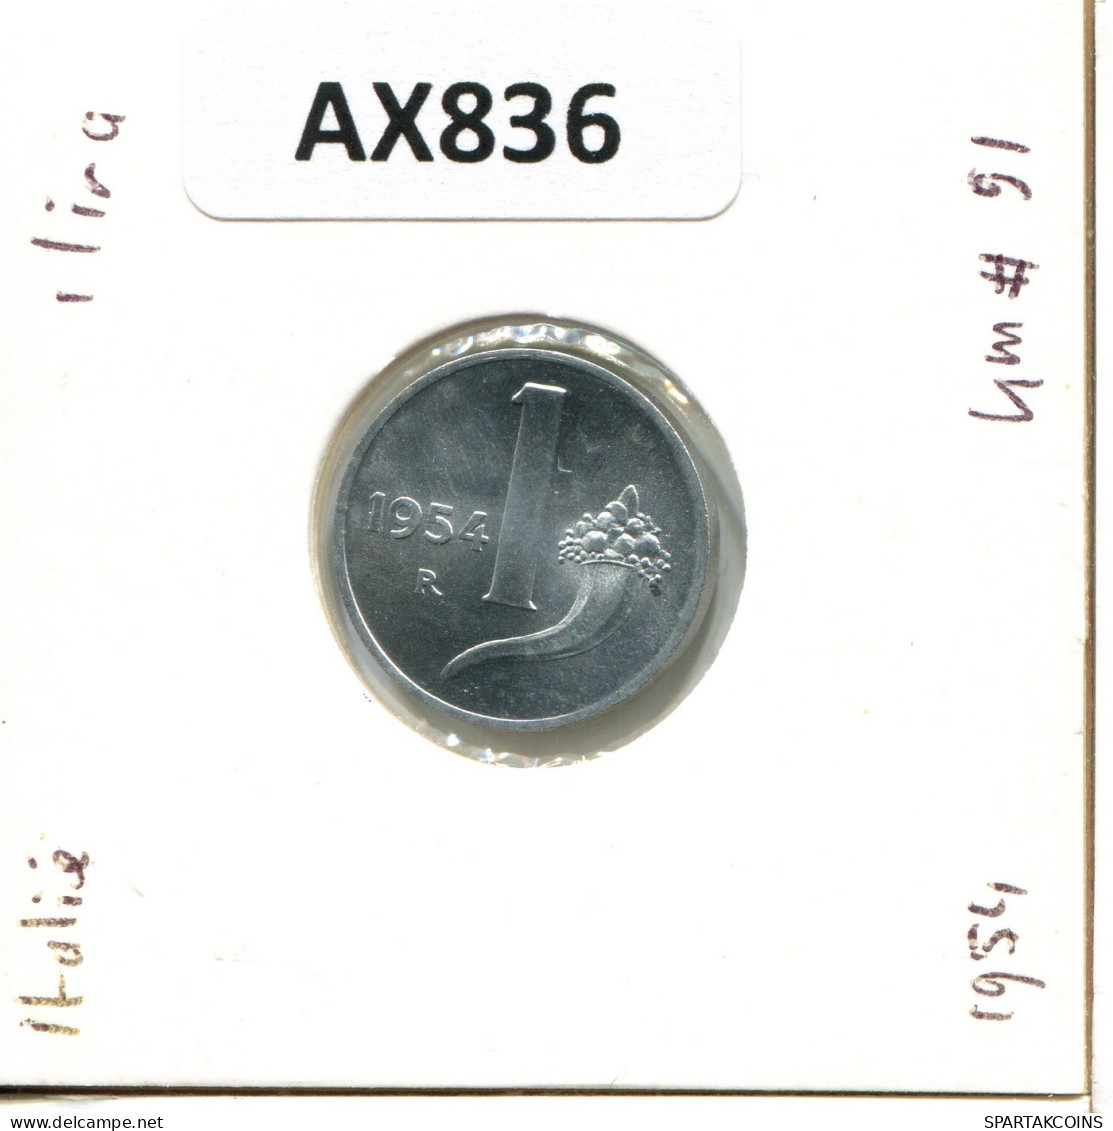 1 LIRA 1954 ITALY Coin #AX836.U - 1 Lira